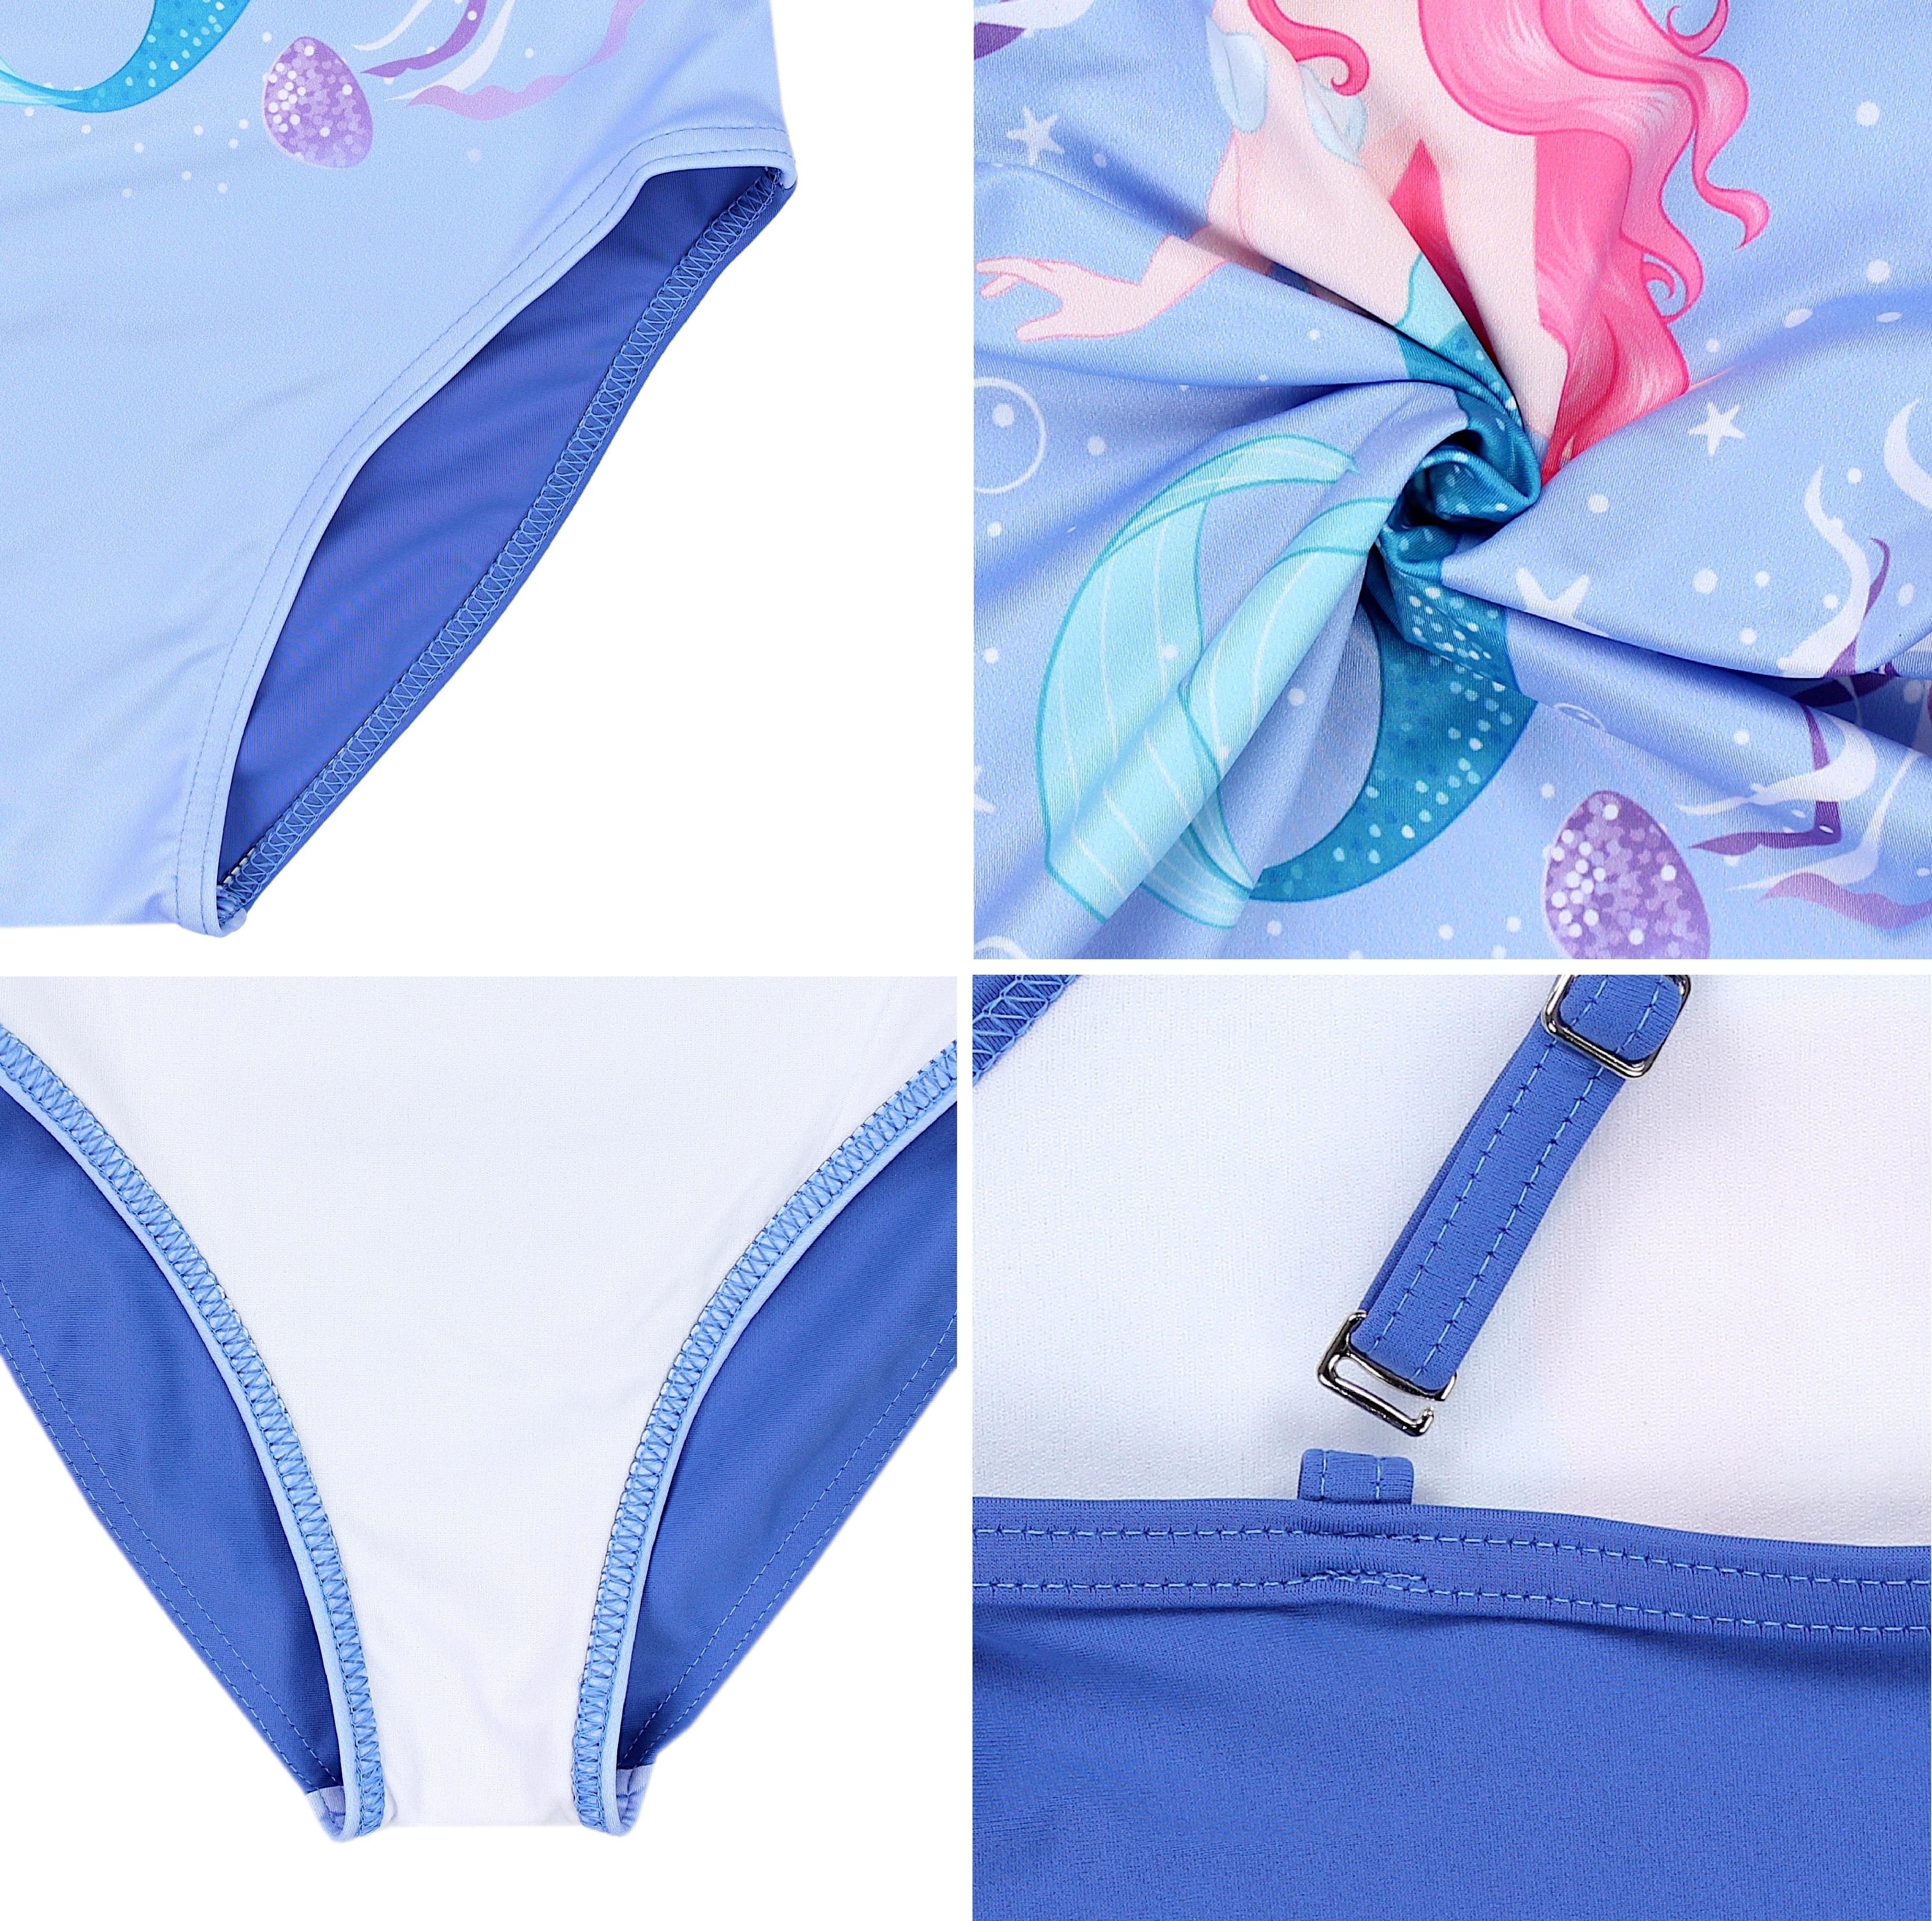 Aquarti Badeanzug Aquarti Wasser mit Mädchen im Badeanzug Spaghettiträgern Meerjungfrau Blau/Pink/Türkis Streifen